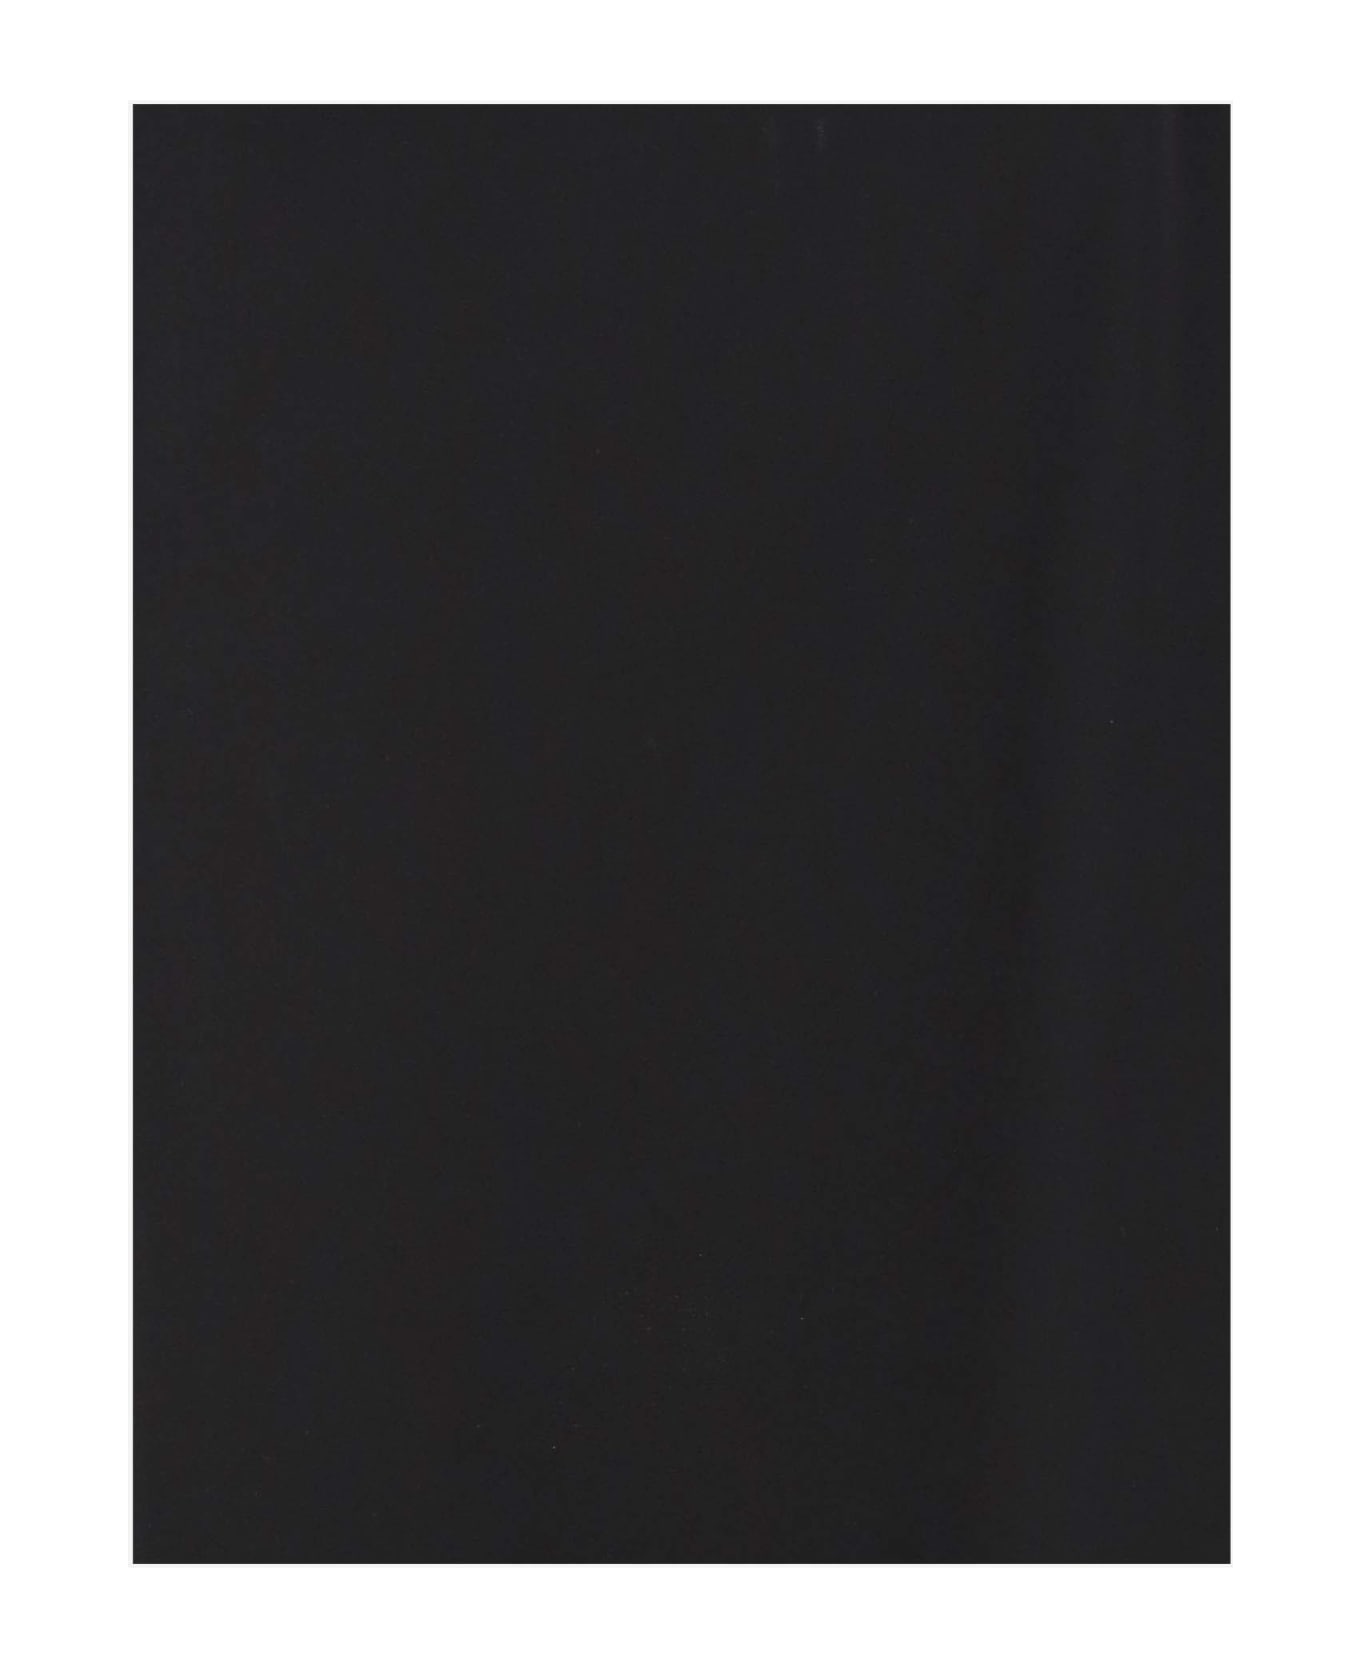 Dolce & Gabbana Long Stretch Jersey Skirt - Nero